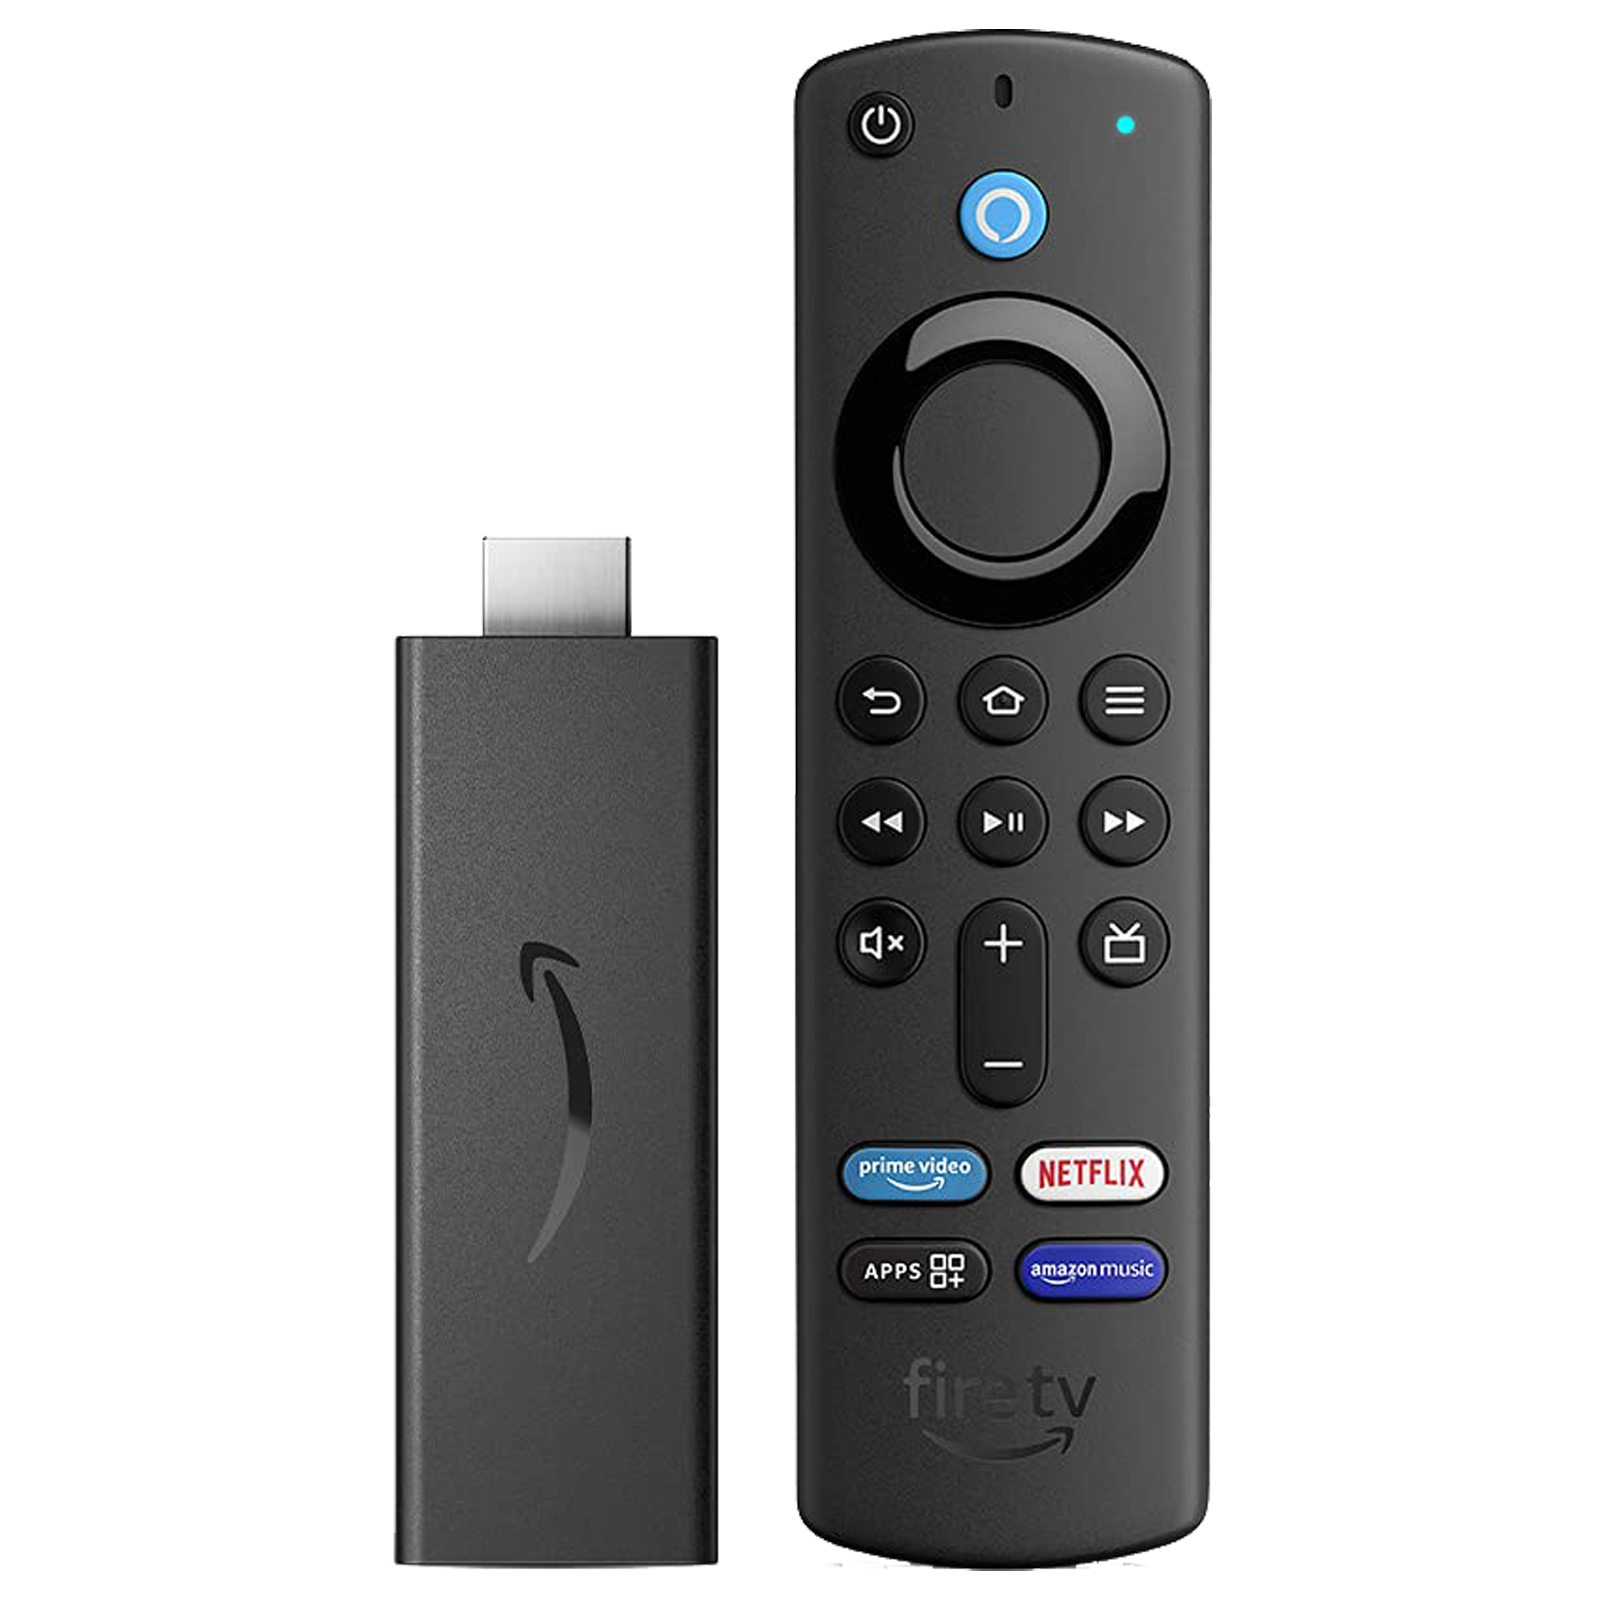  - Amazon Fire TV Stick 3rd Gen with Alexa Voice Remote (HD Streaming, B08R6QR863, Black)